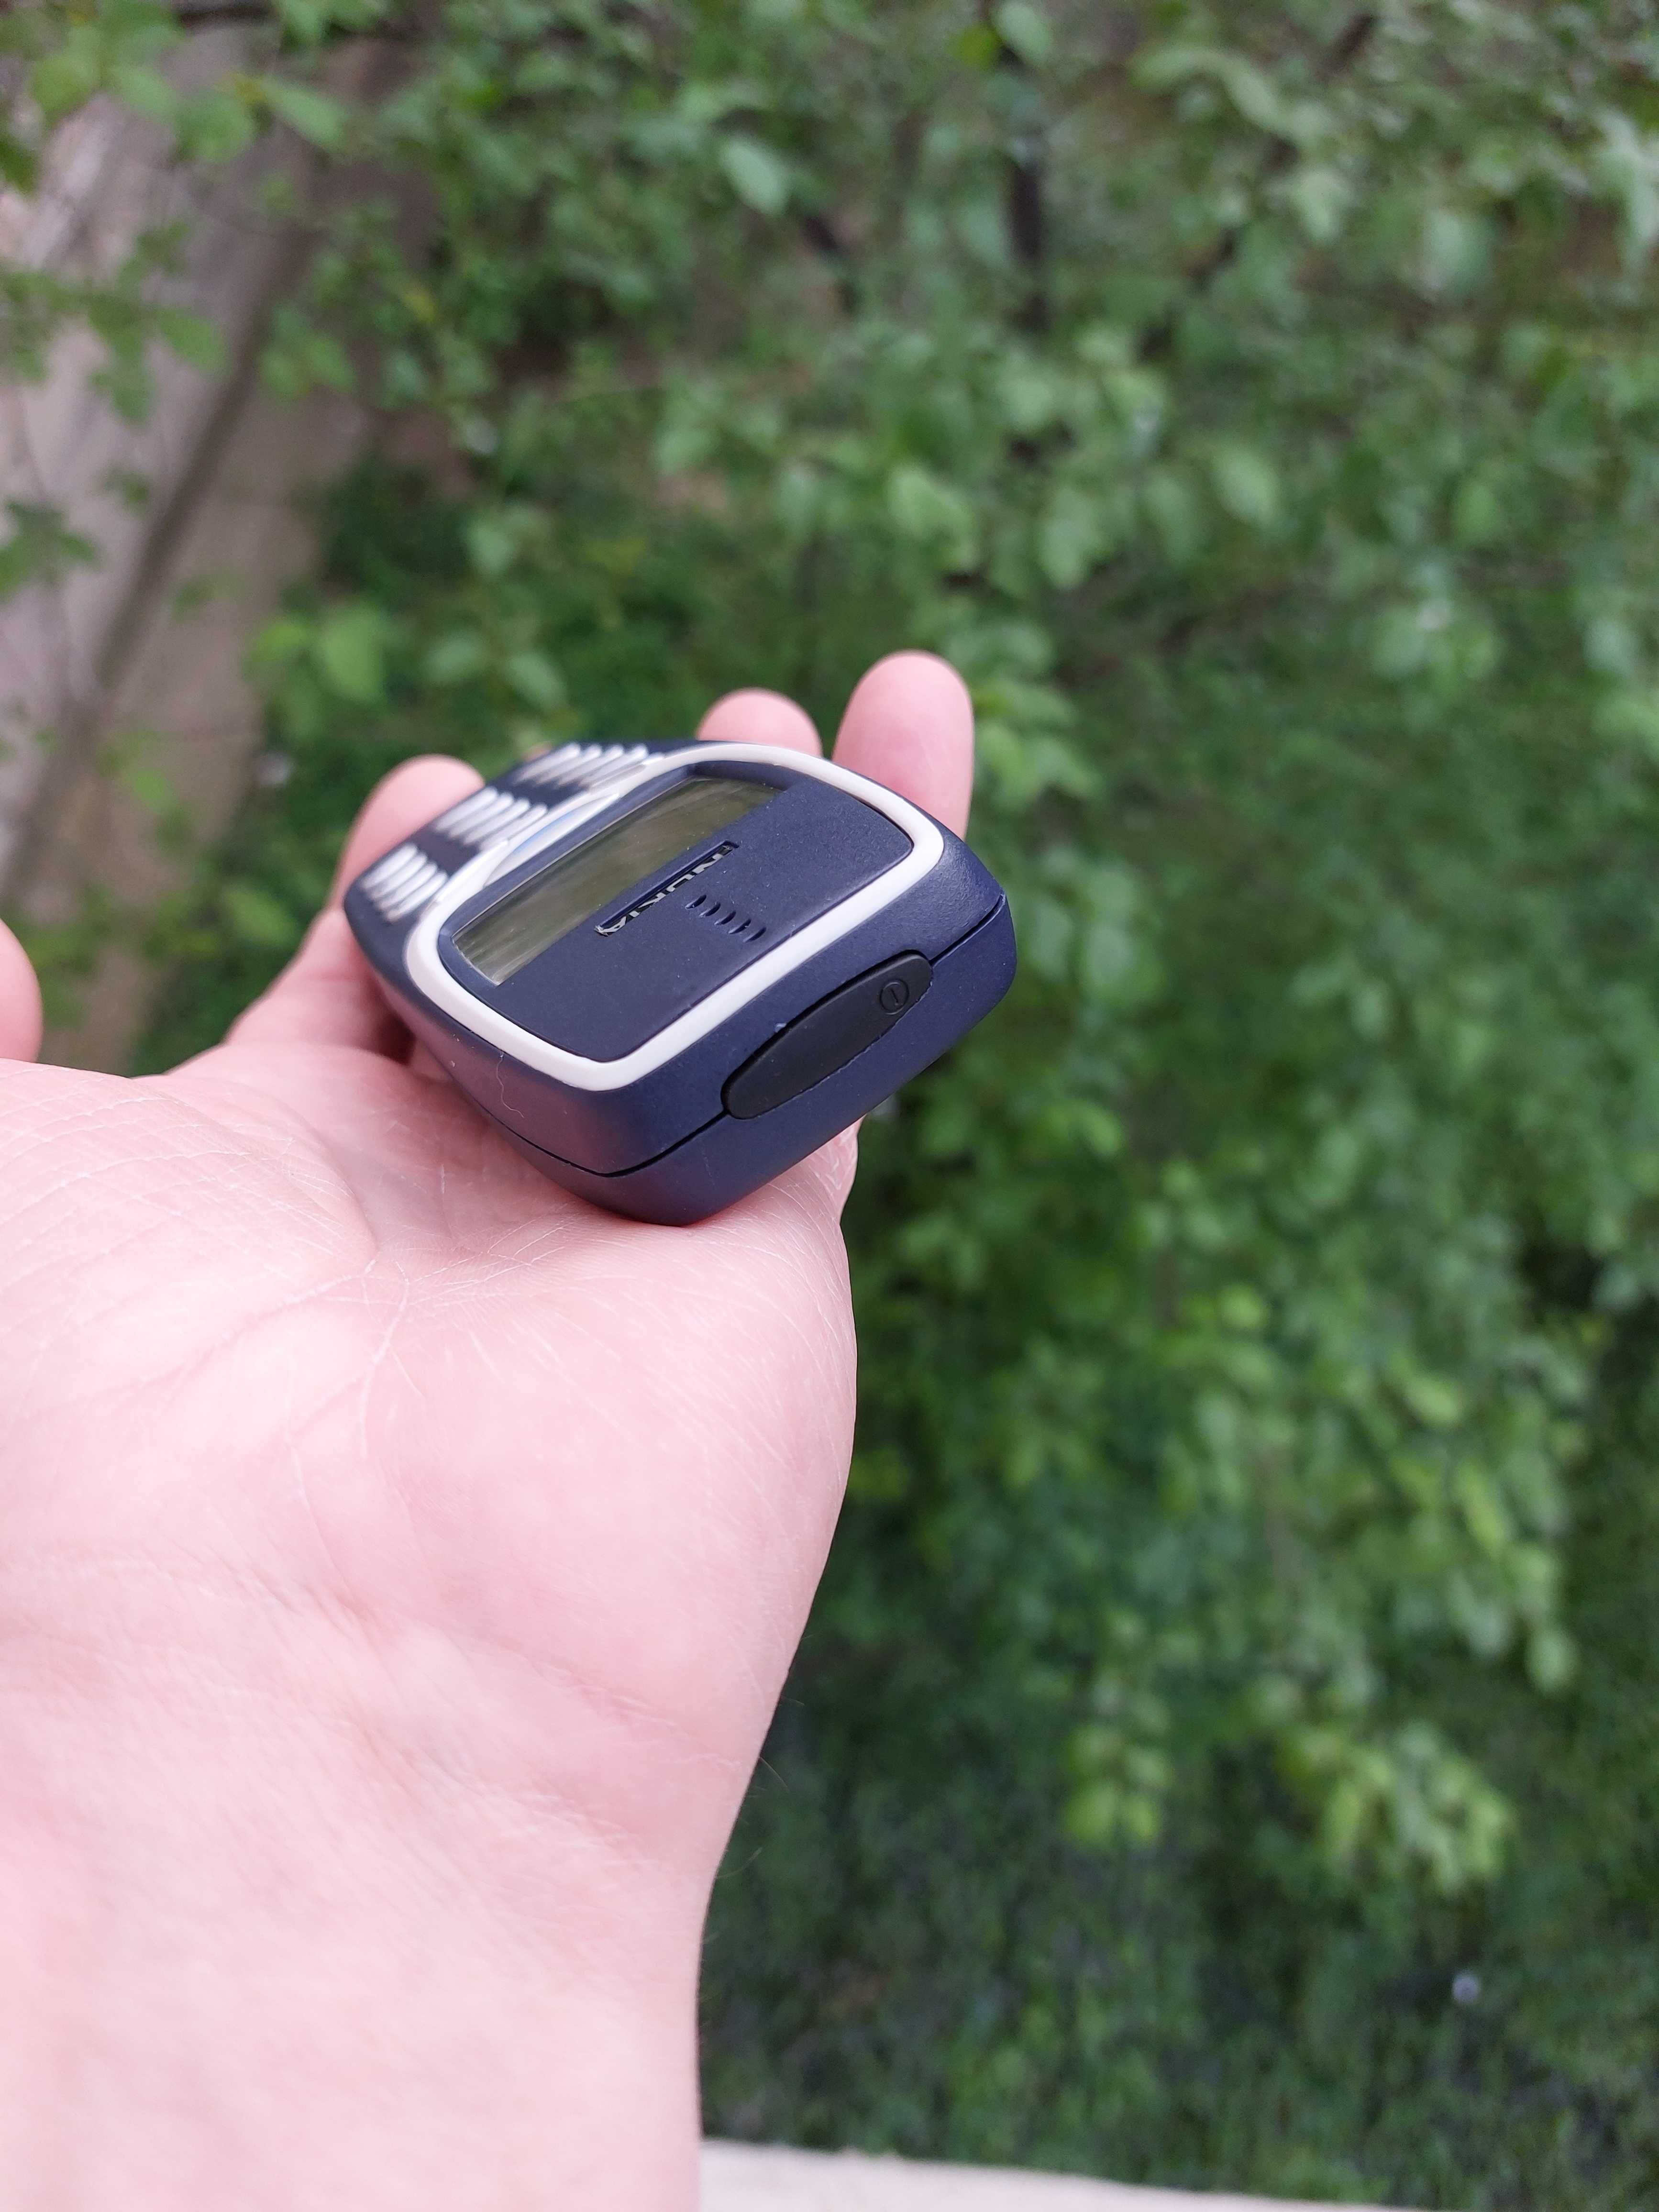 Nokia 3310 decodat impecabil cu putine ore vorbite din 2003